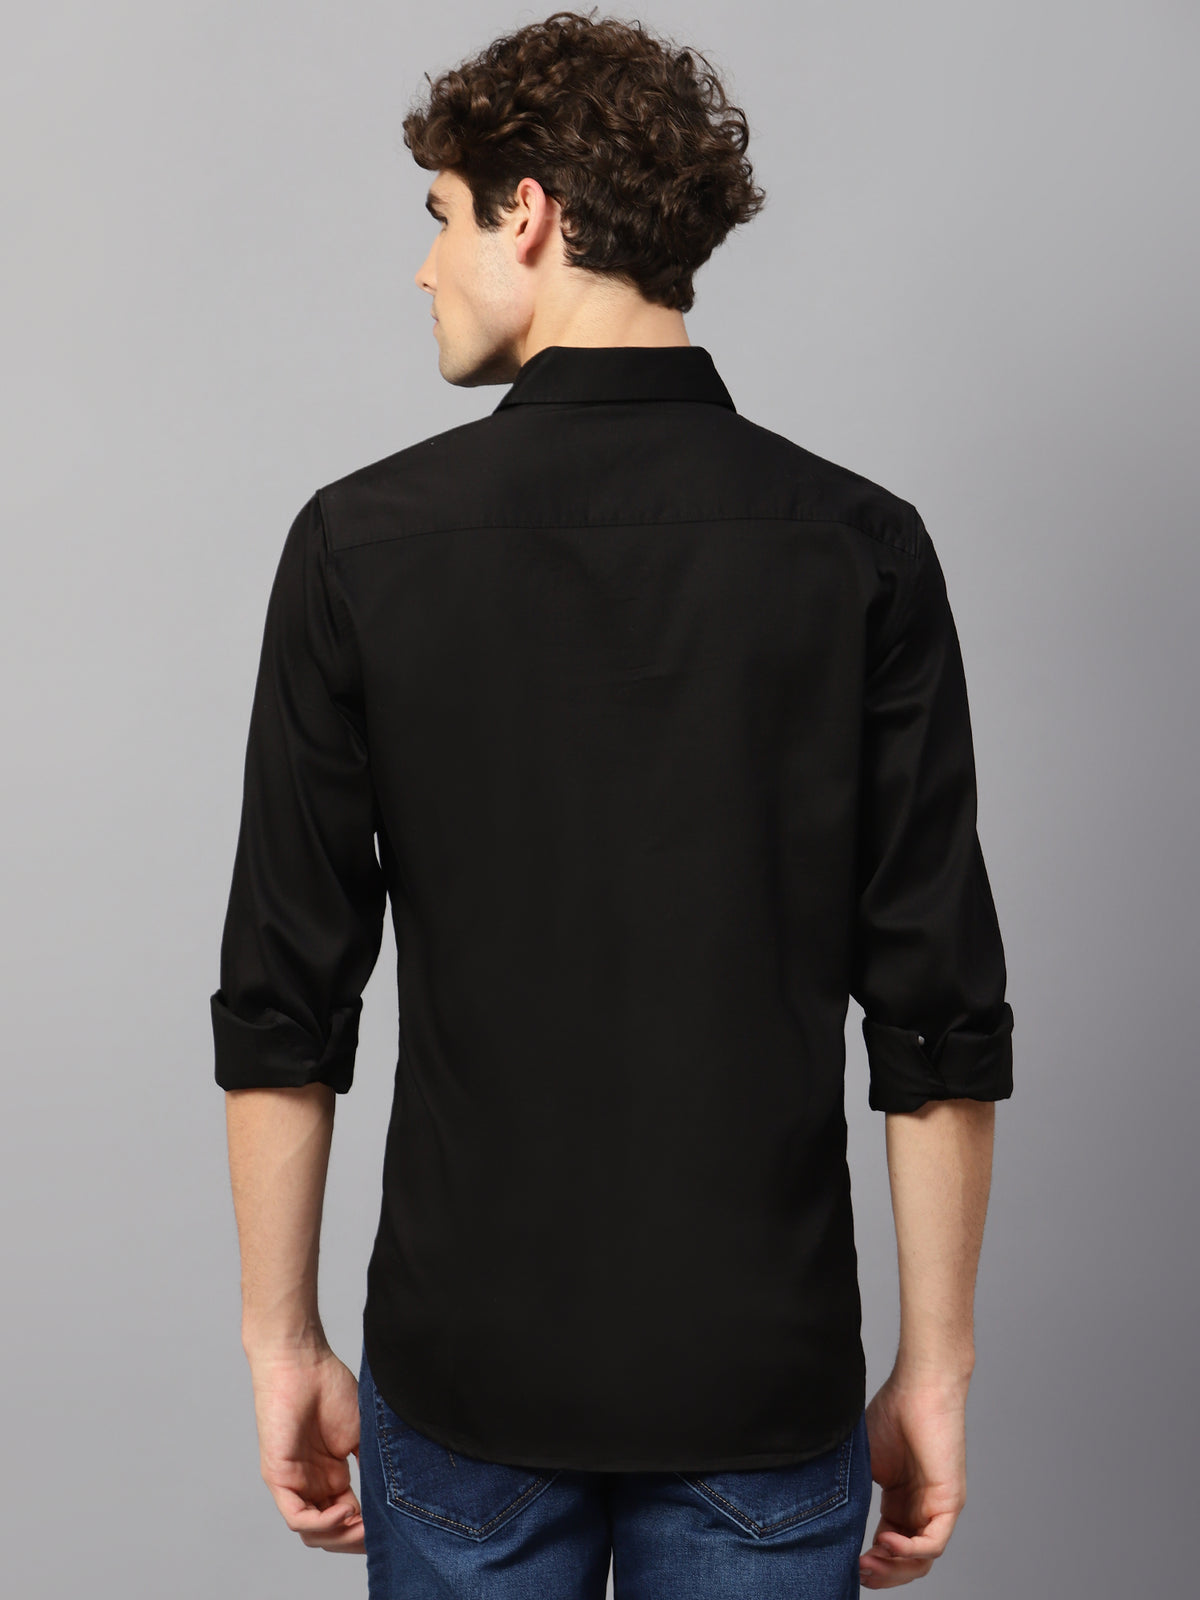 Premium Cotton Lycra Satin Black Shirt